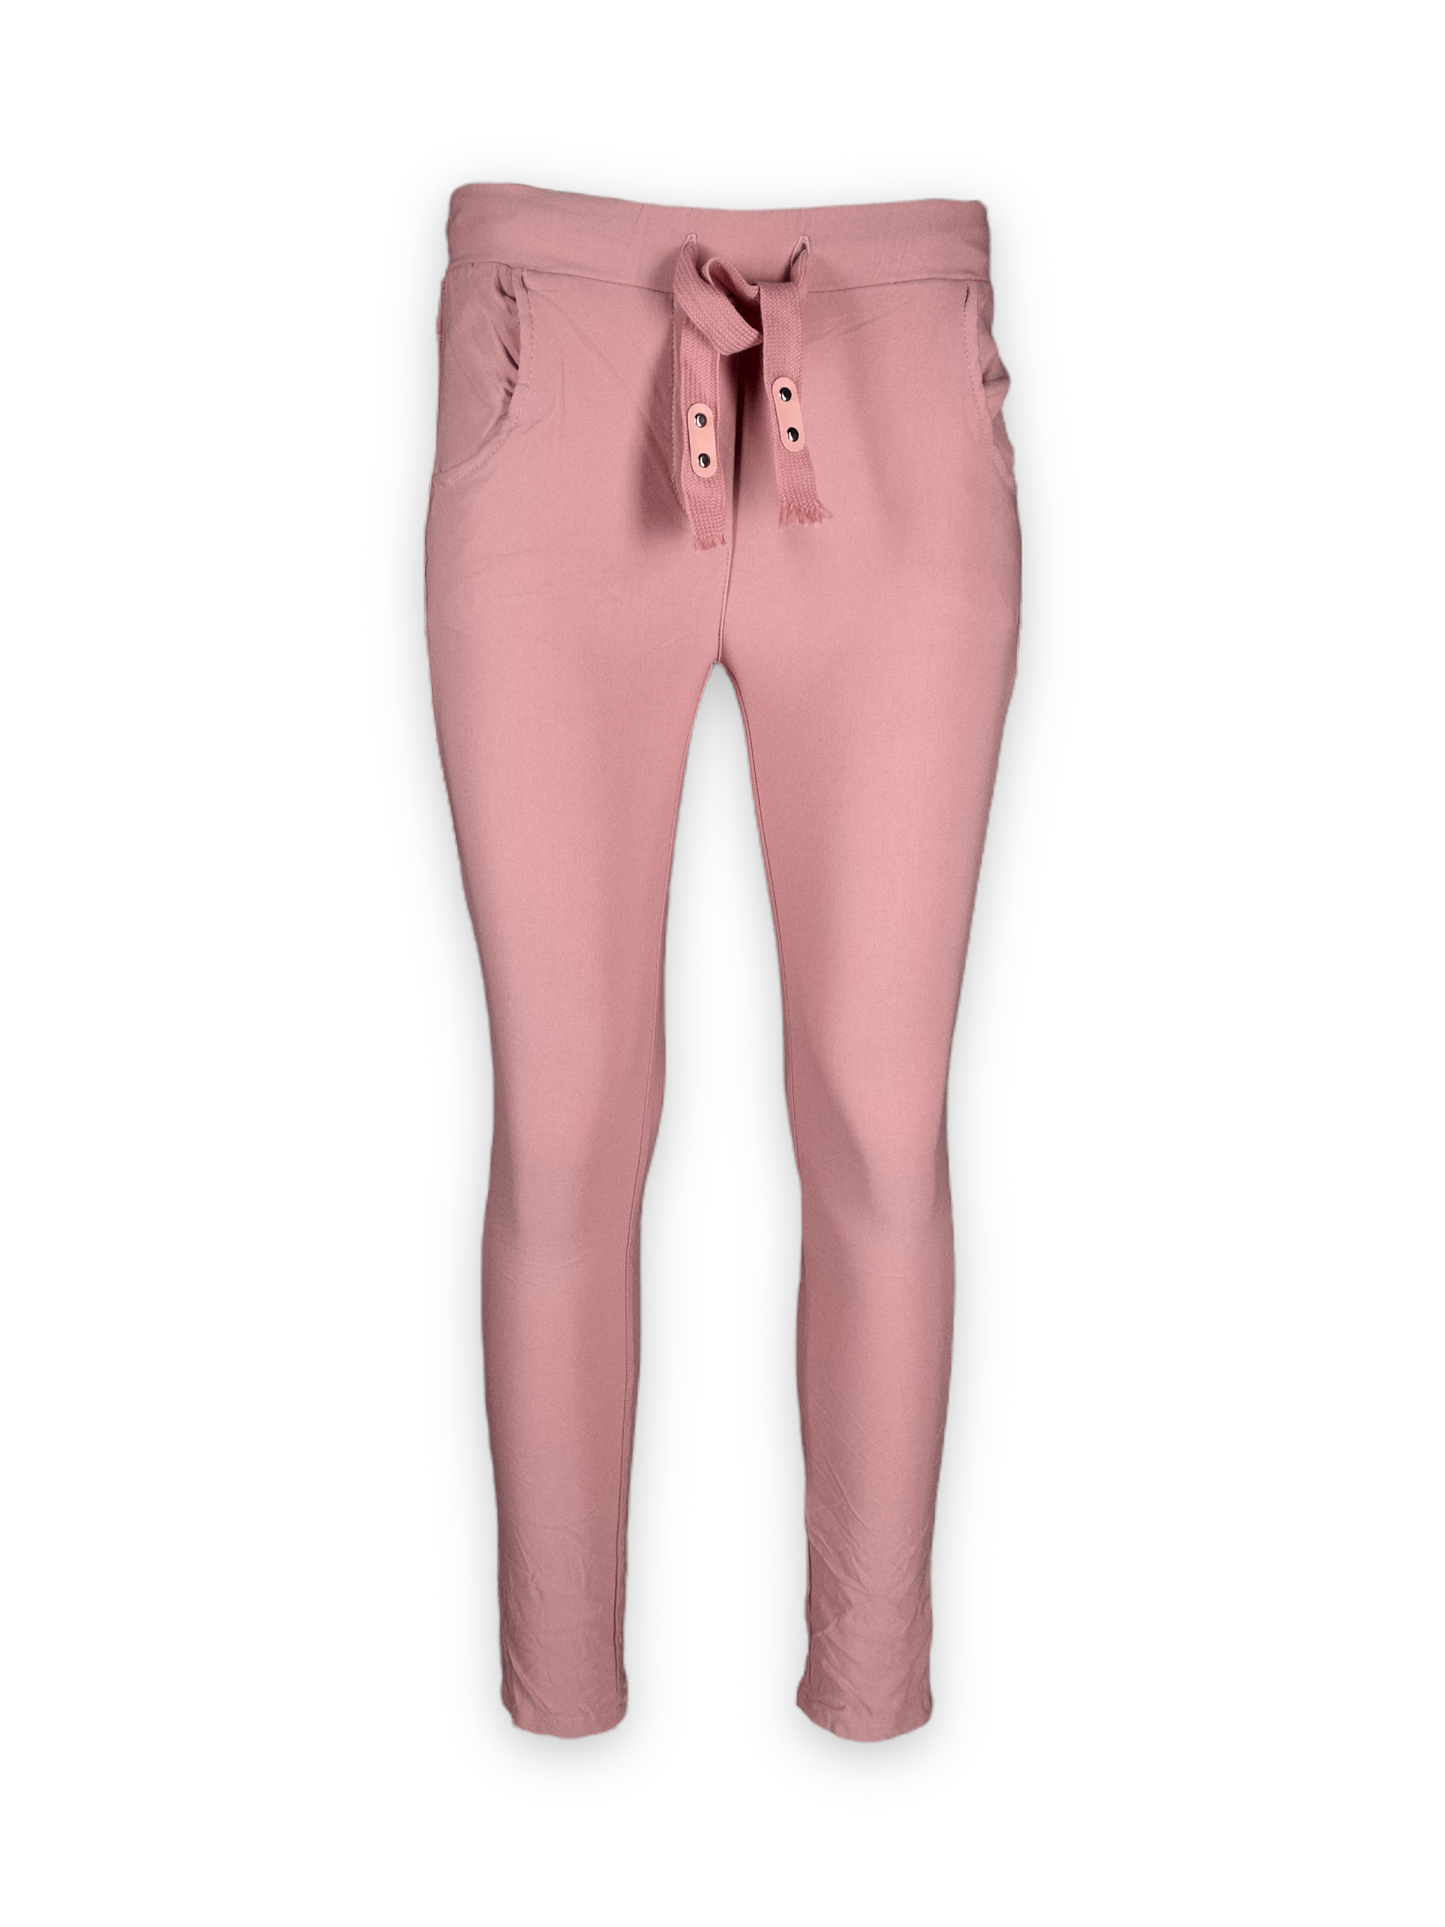 Pink Oxygen pants for women